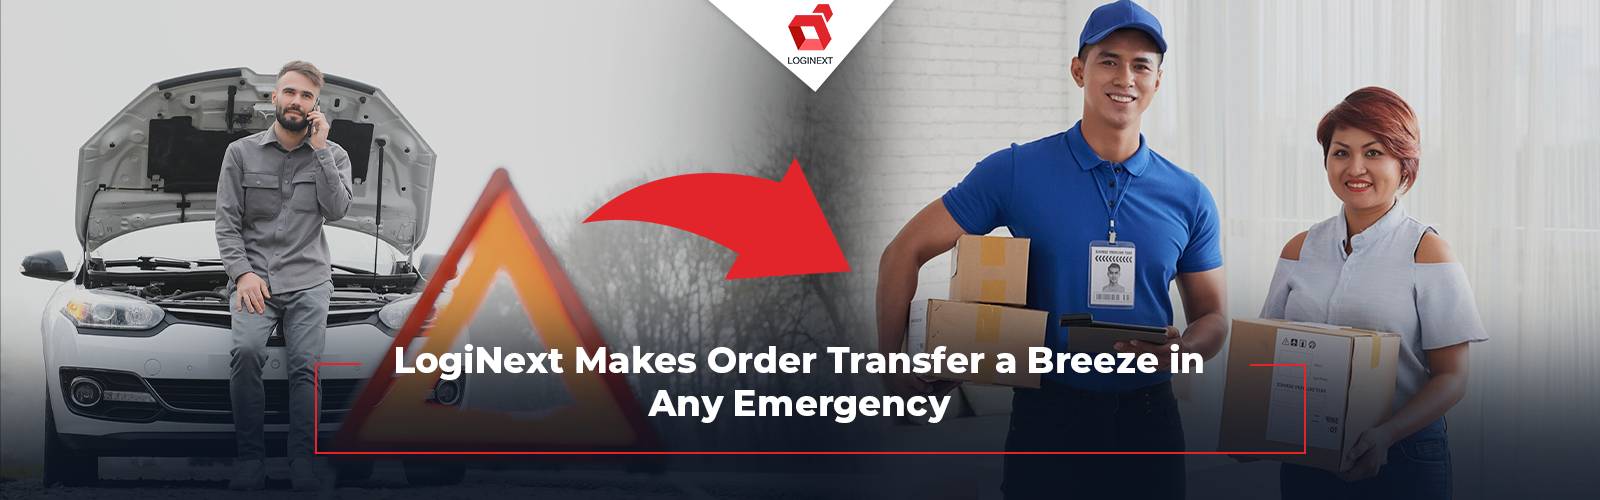 Loginext's delivery management system Makes Order Transfer a Breeze